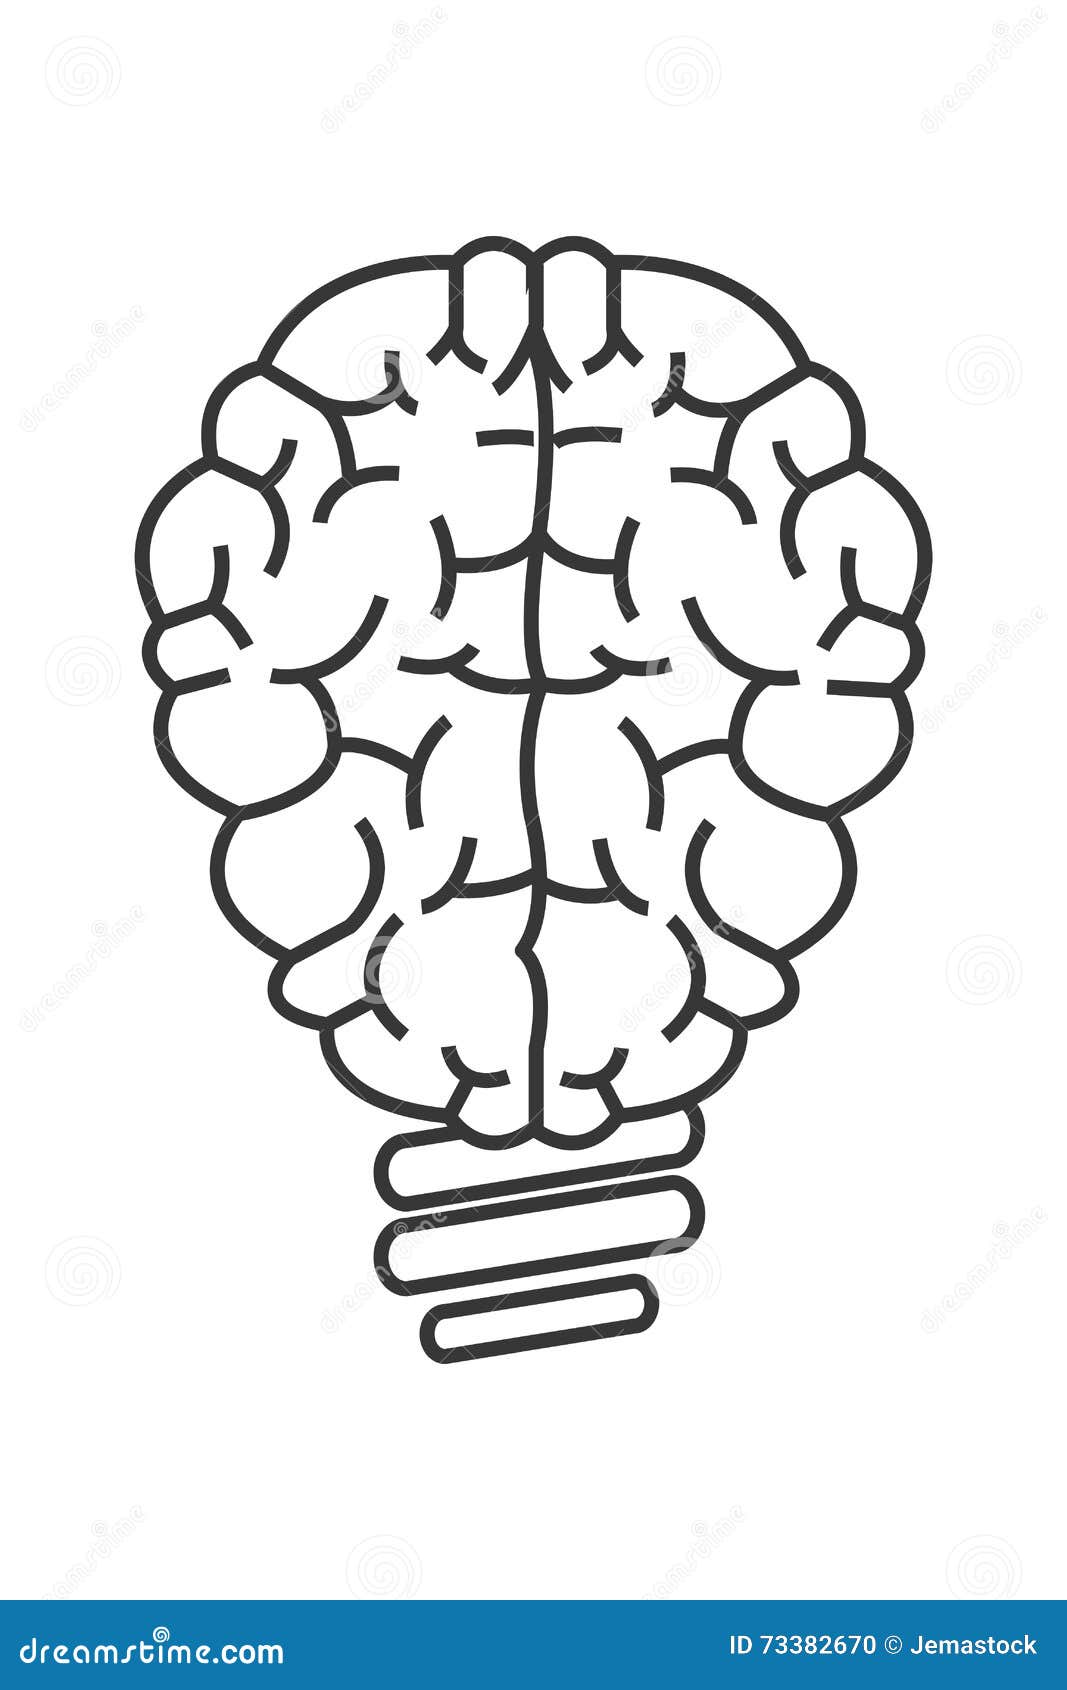 Brain lightbulb icon stock illustration. Illustration of power - 73382670